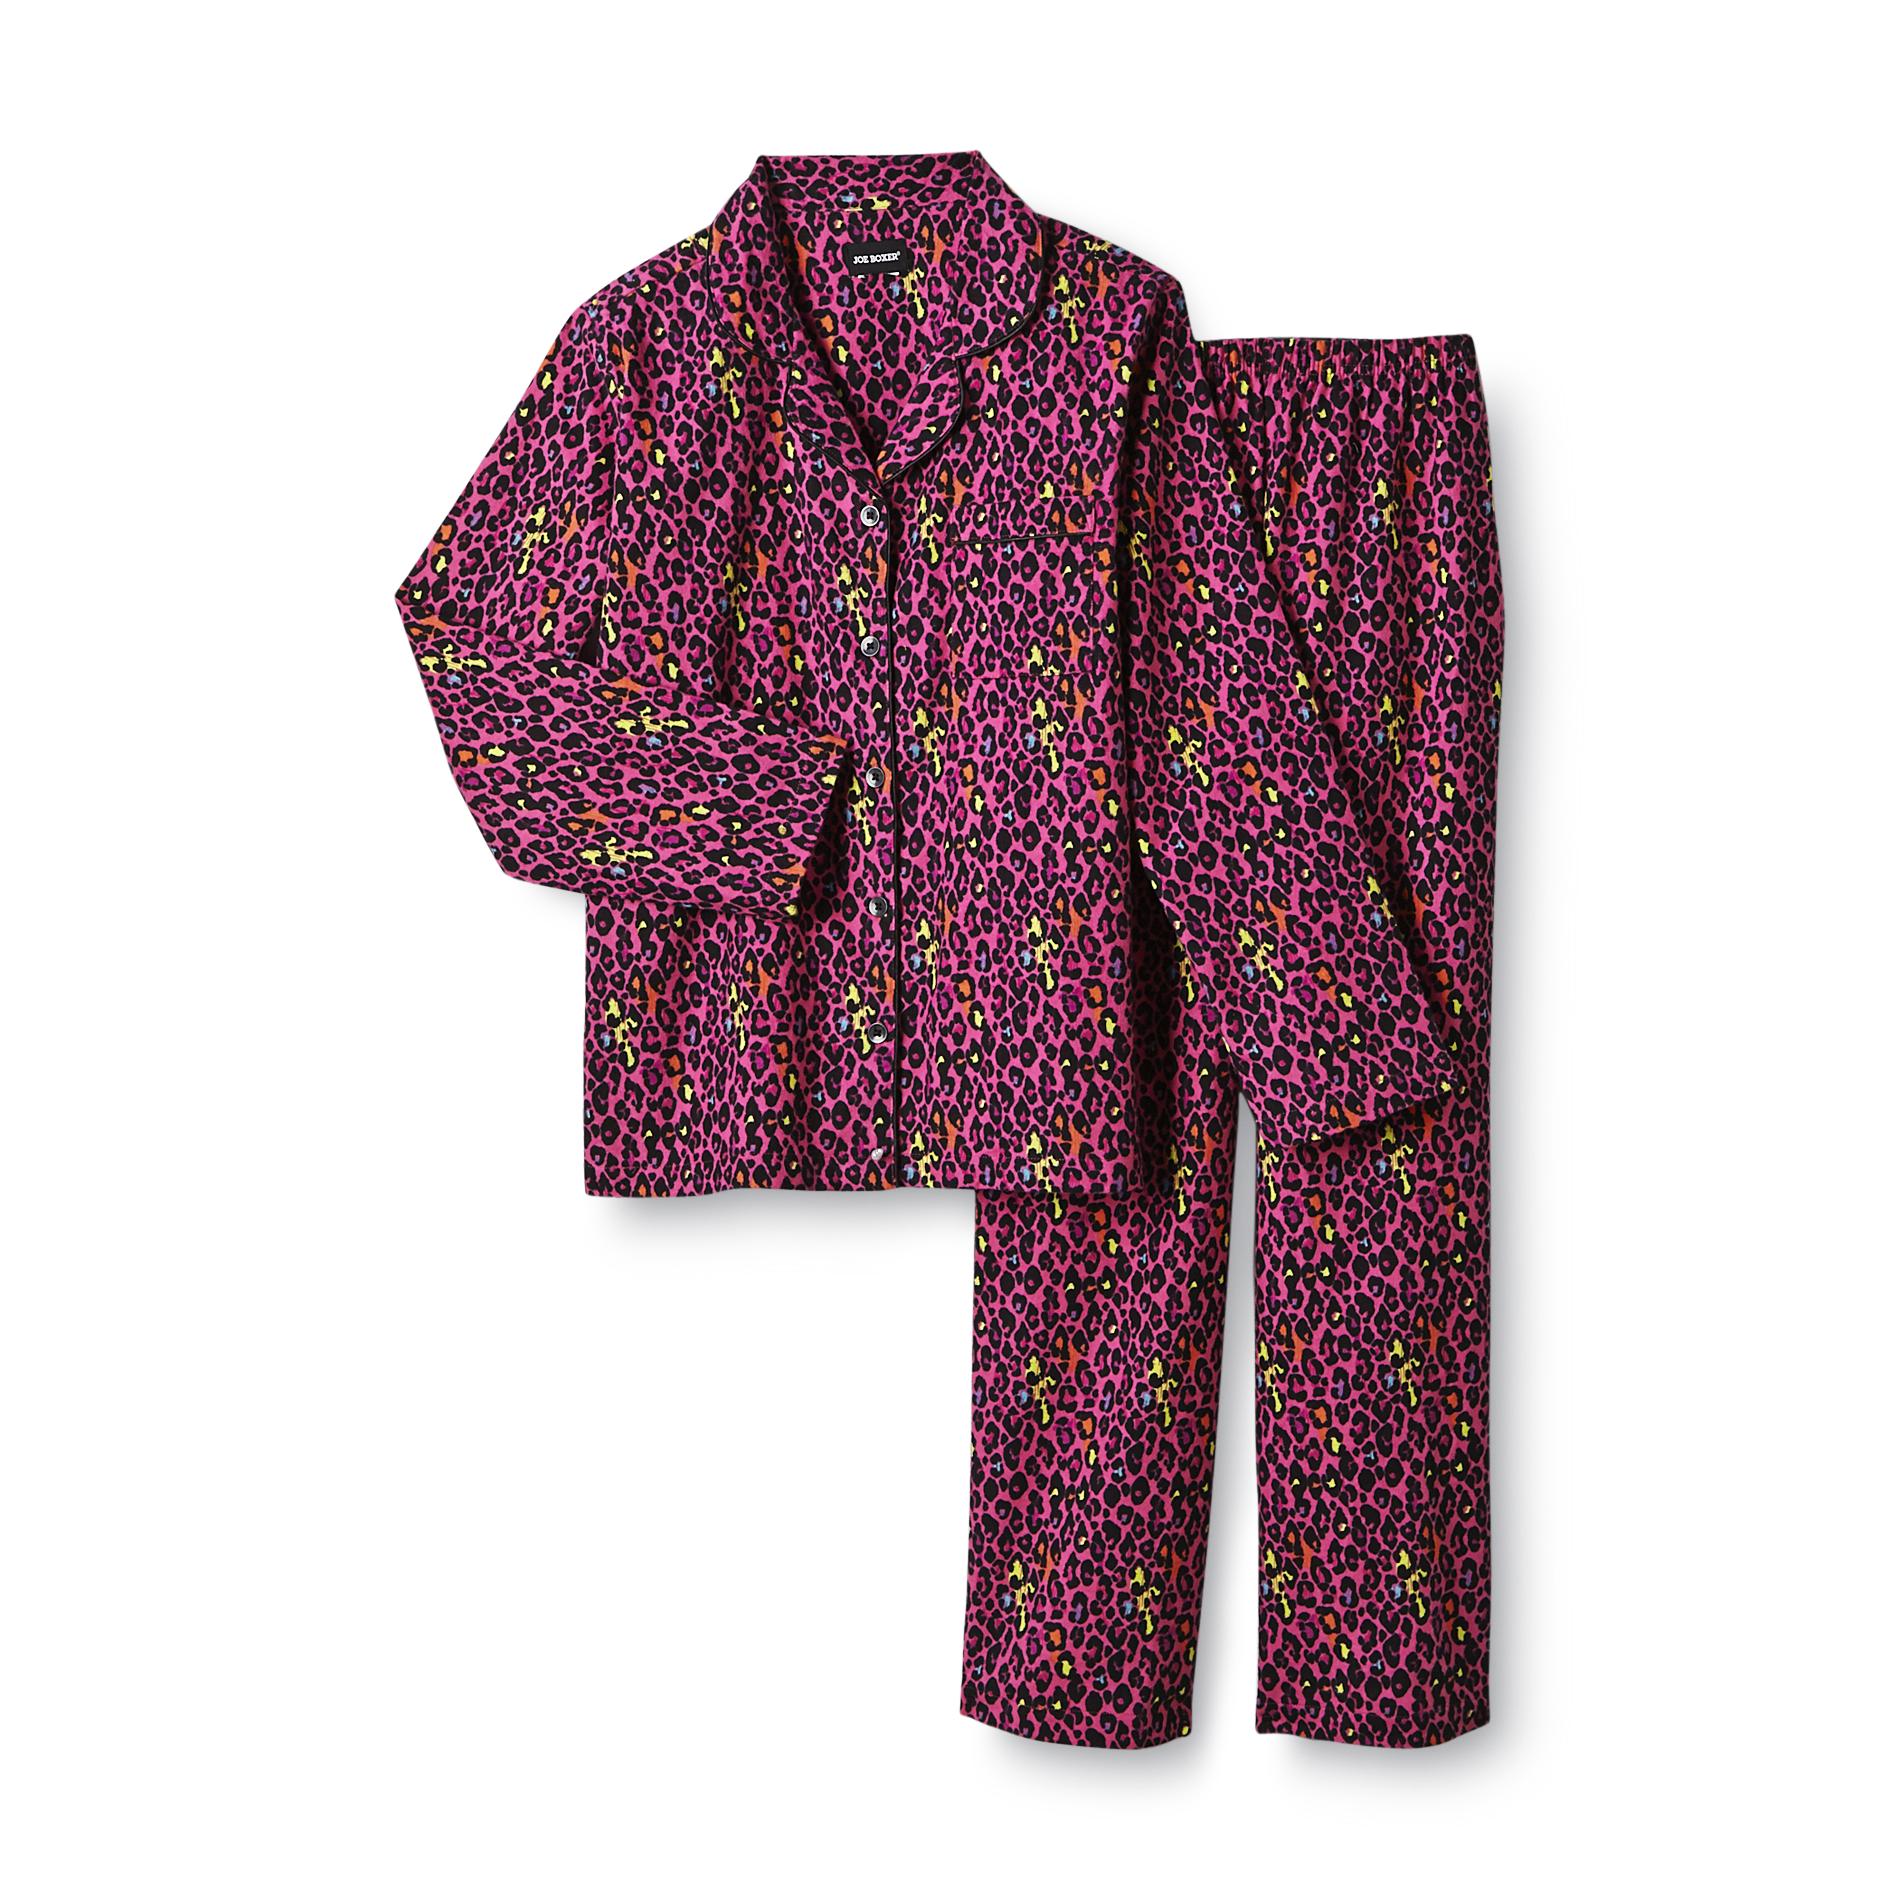 Joe Boxer Women's 2-Piece Flannel Pajama Set - Leopard Print